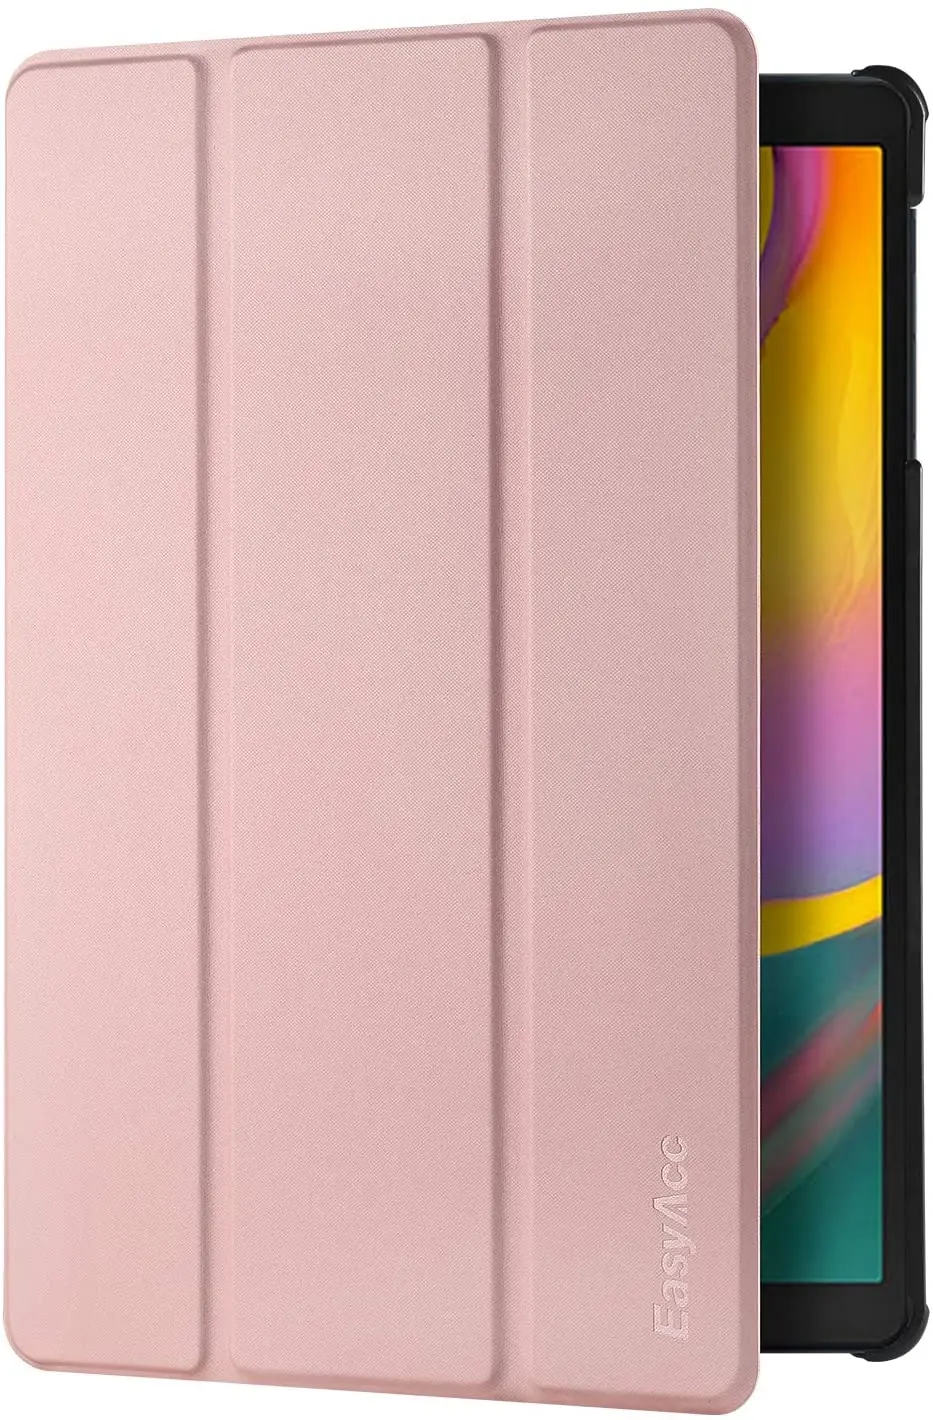 

EasyAcc Tablet case for Samsung Galaxy Tab S5e 10.5 inch 2019 SM-T720 SM-T725 Funda PU Leathe Smart cover Slim Protective Shell